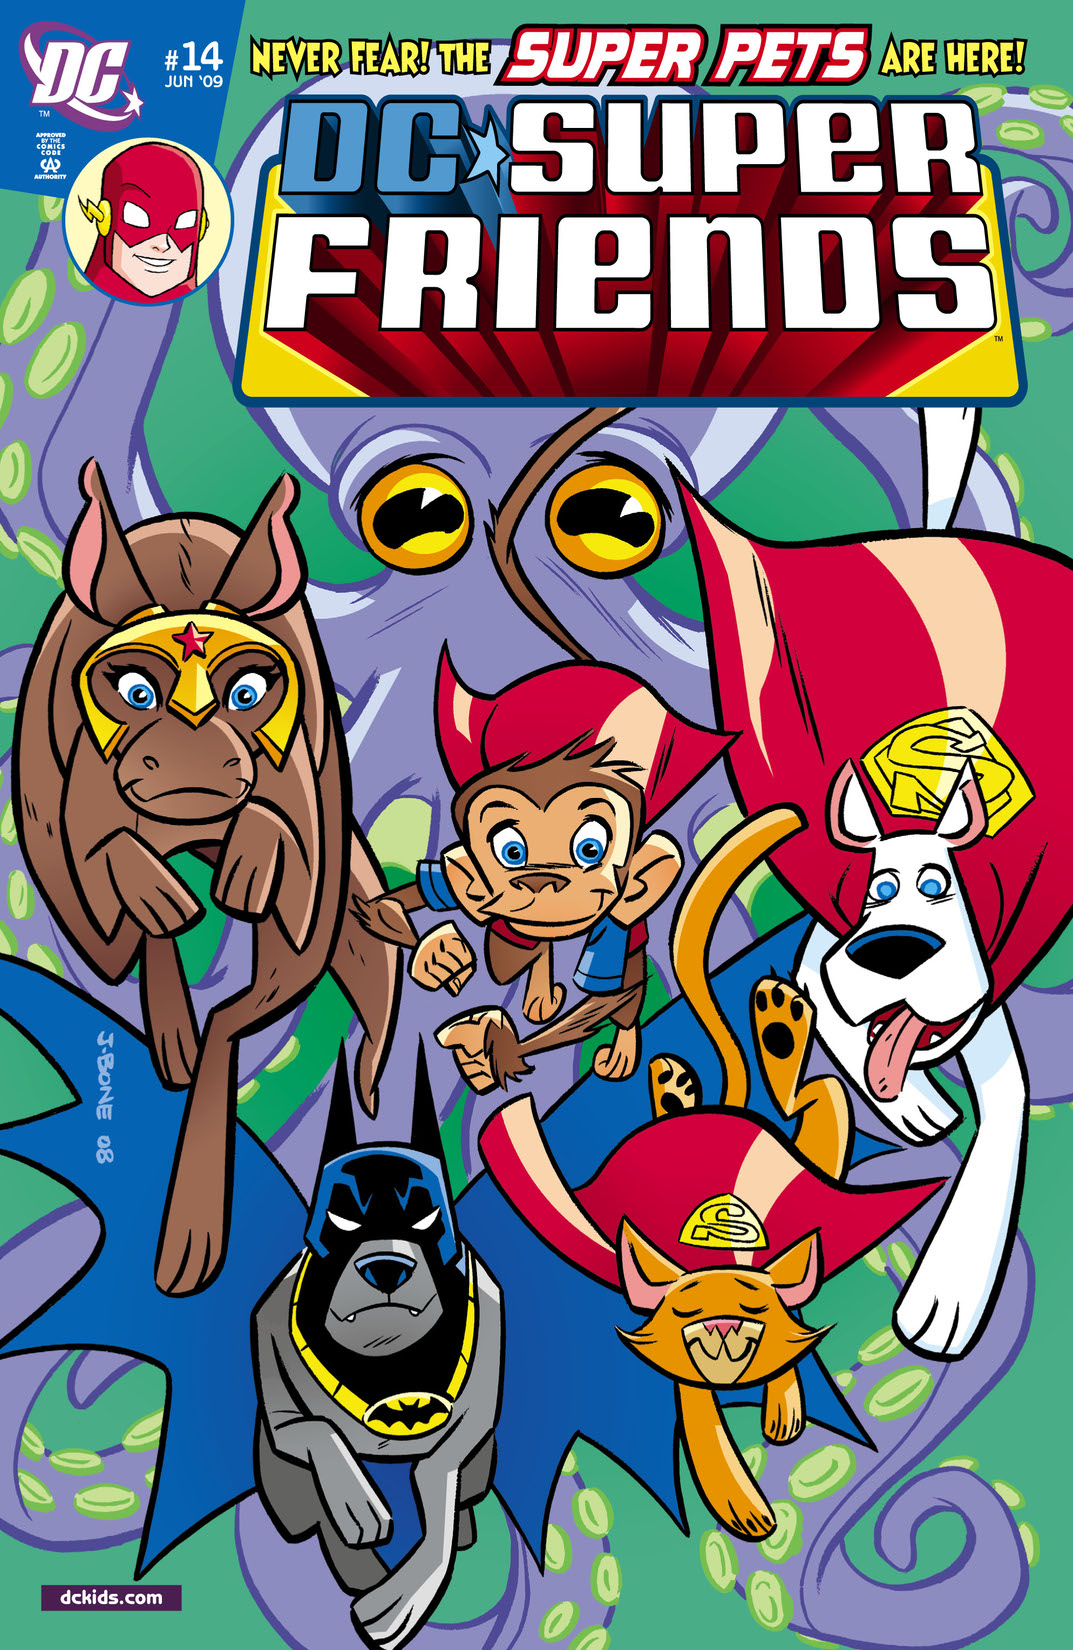 Super Friends (2008-) #14 preview images